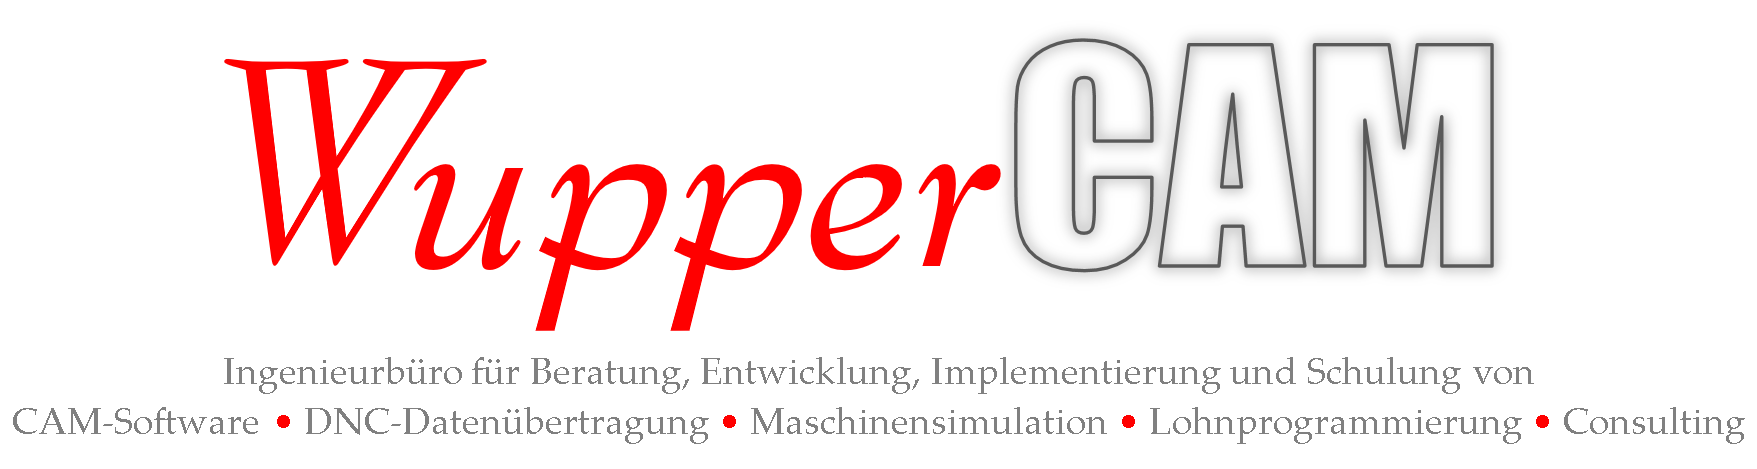 WupperCAM- Logo komplett